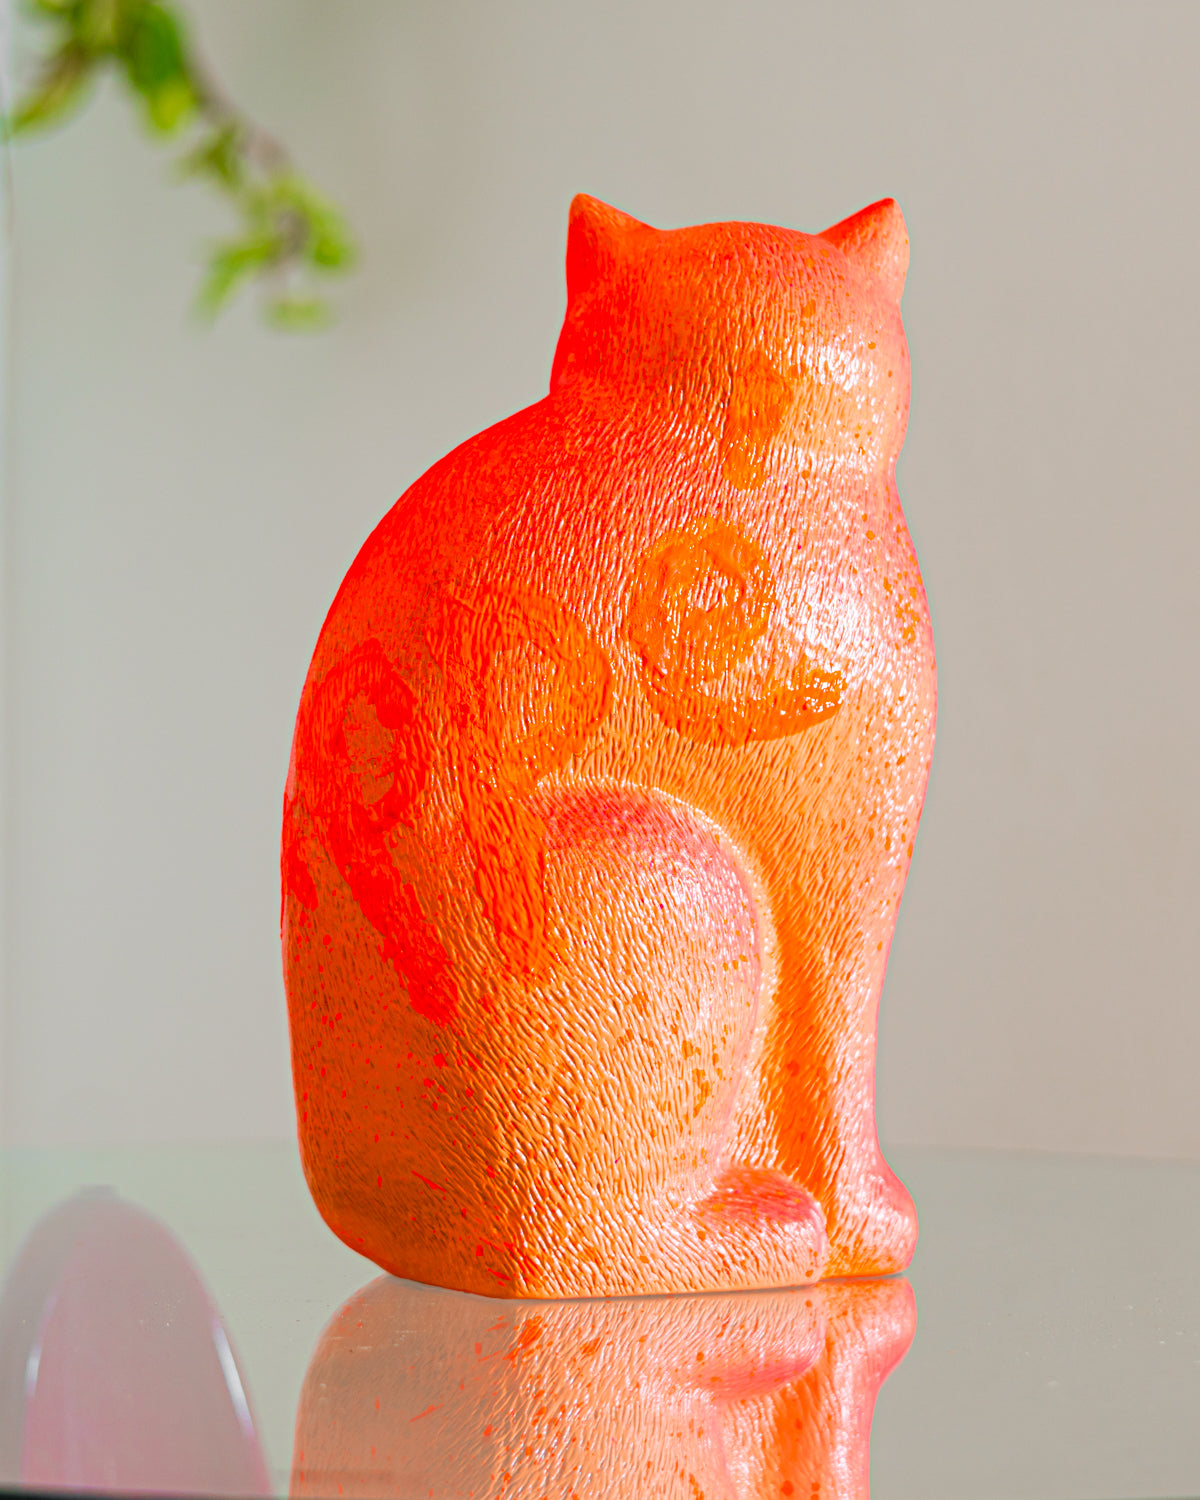 House Cat Sculpture - 1 of 1